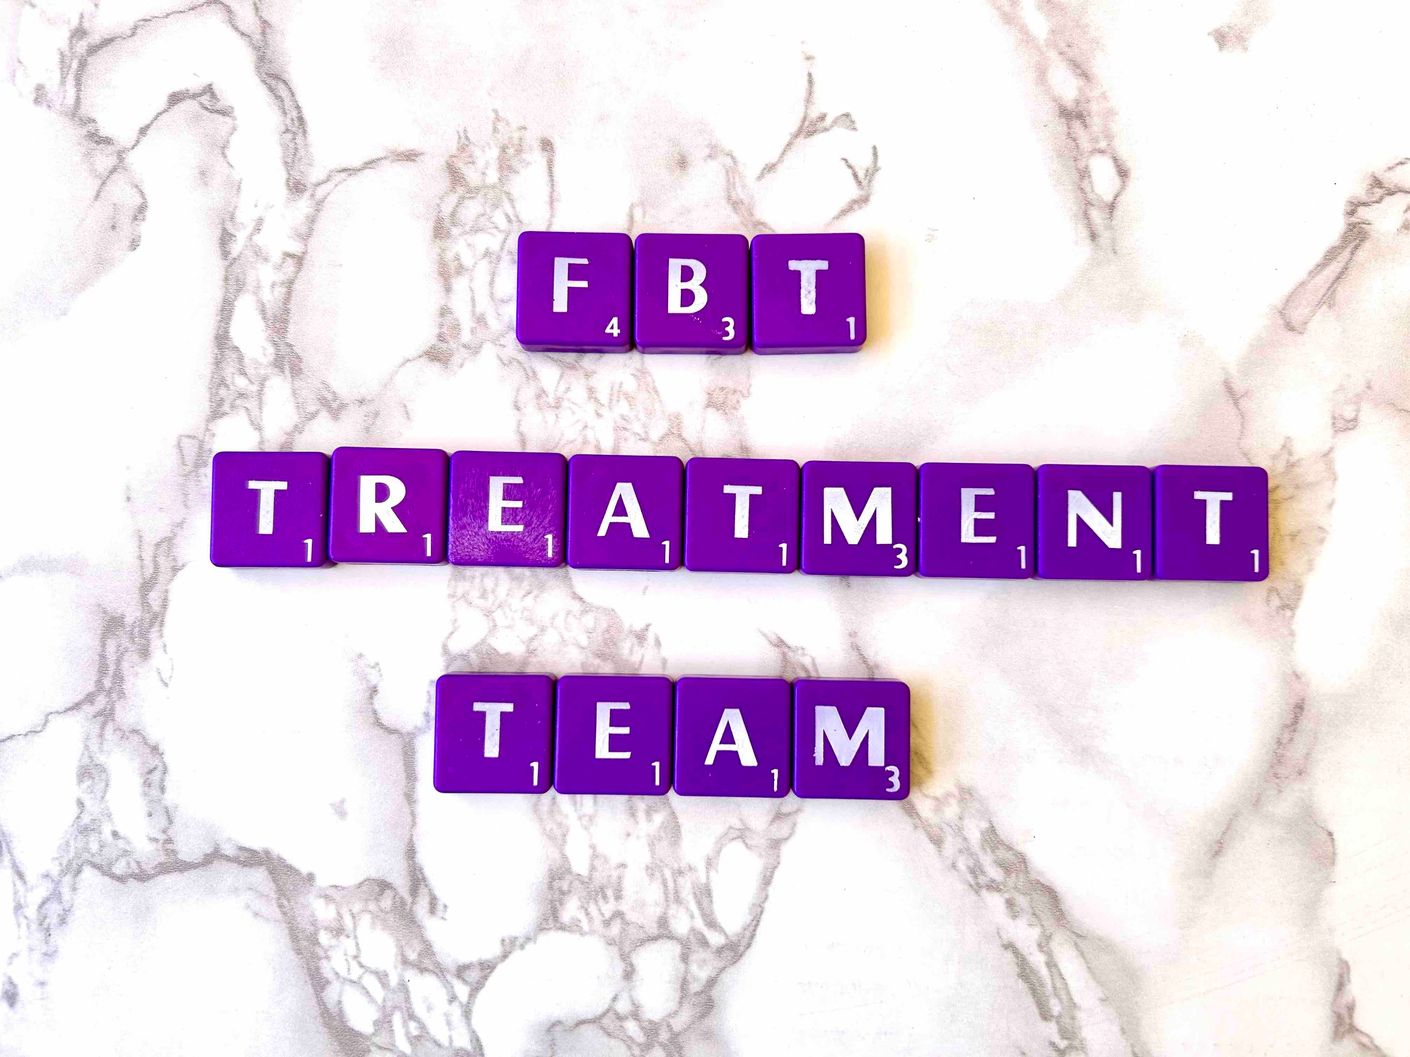 FBT Treatment Team Including Therapist, Dietitian, and Medical Doctor in Los Angeles, California [Image description: Purple scrabble tiles spelling "FBT Treatment Team"]